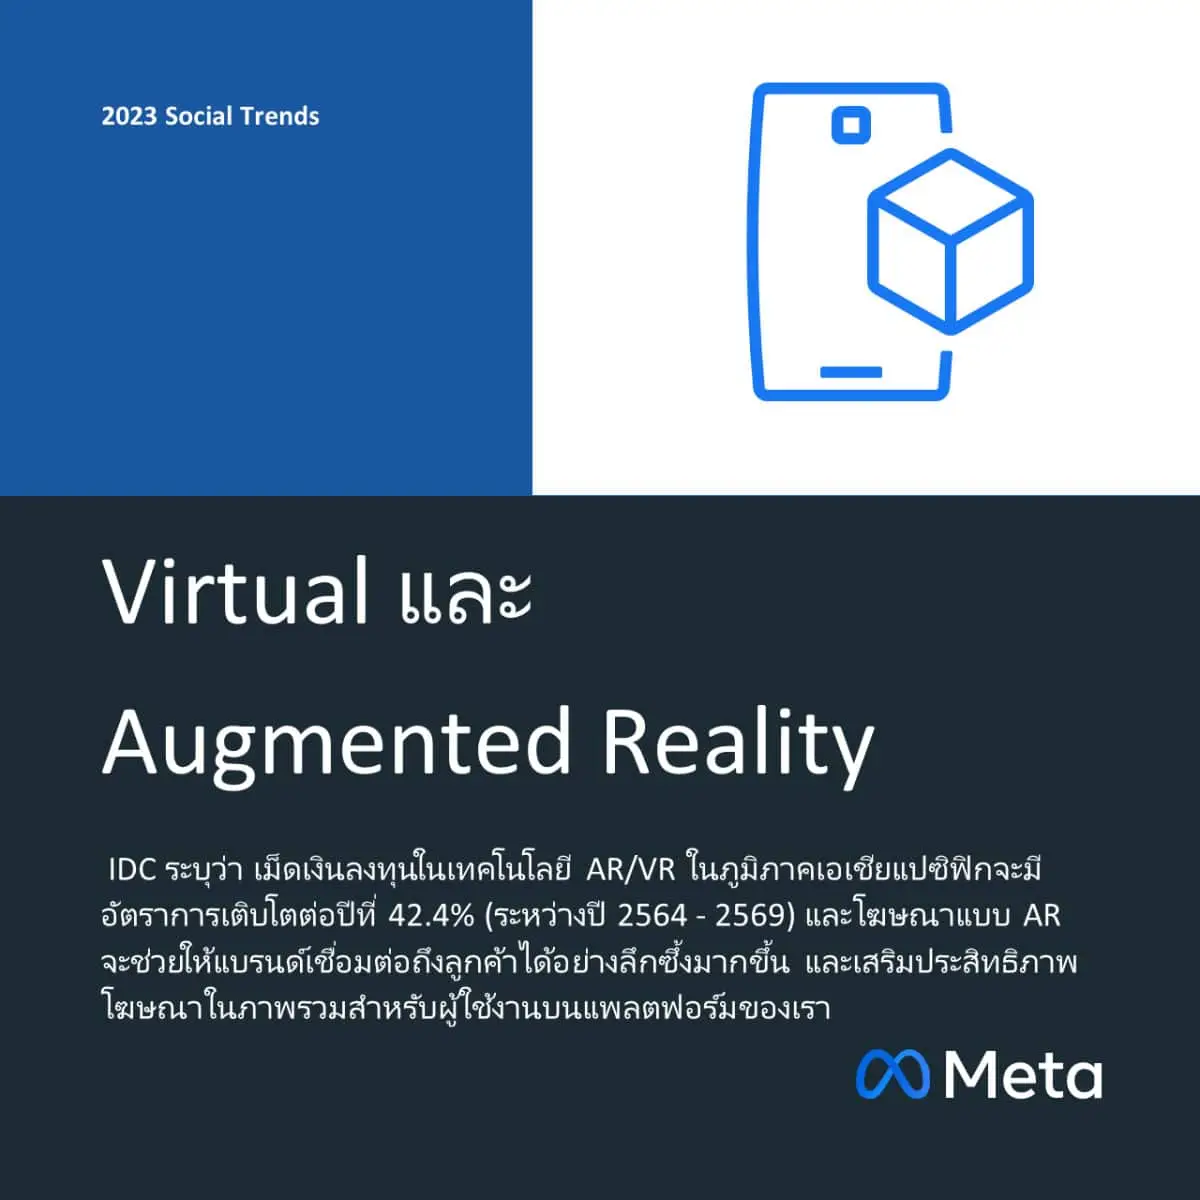 meta-7-social-trends-for-2023-virtual-AR